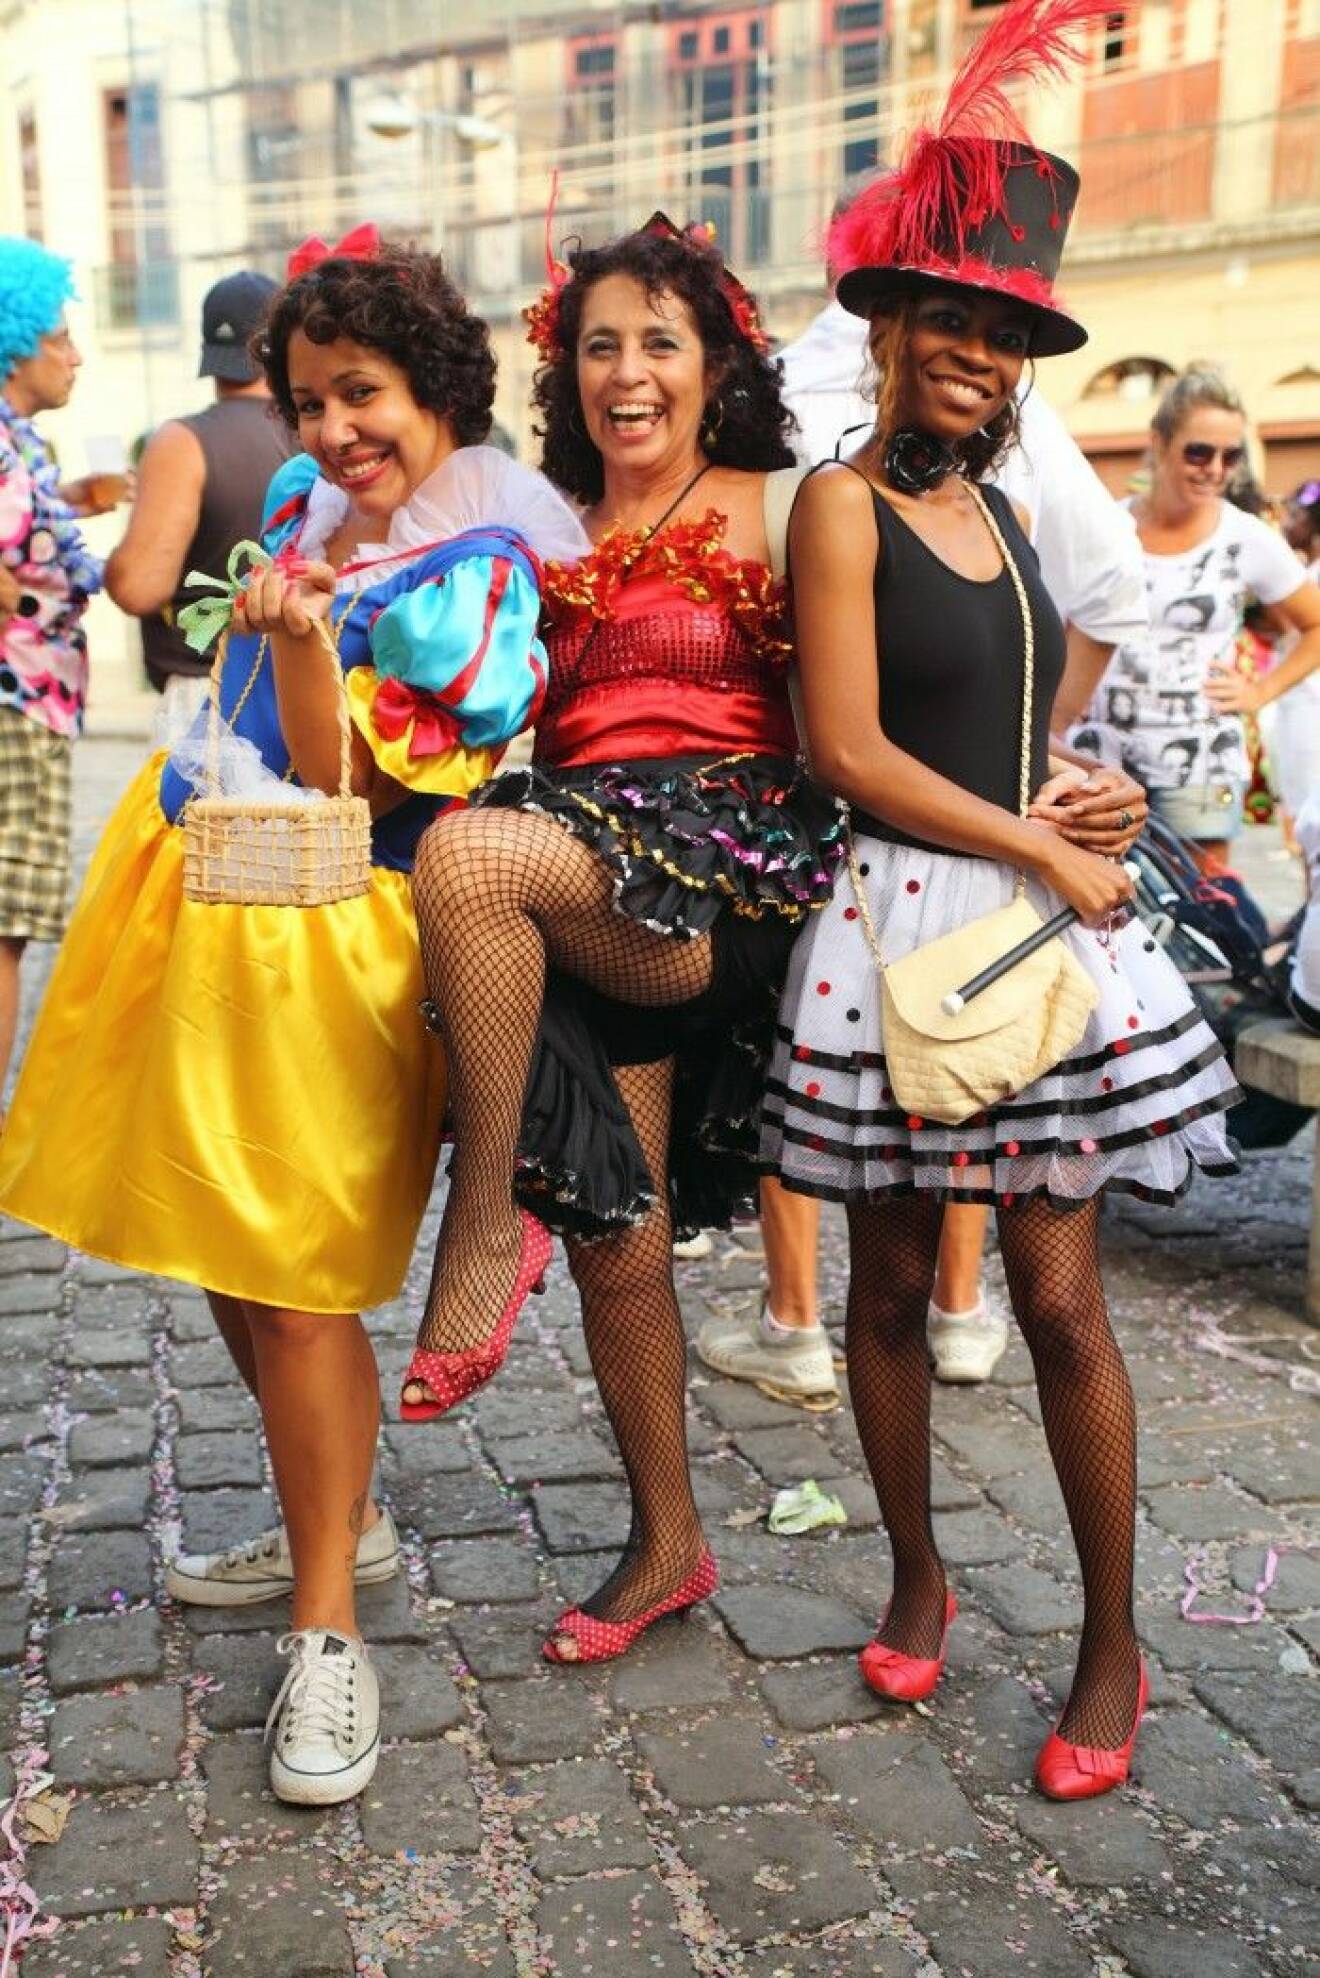 Ladies in costume celebrating Carnival on the streets of Rio de Janeiro, Brazil